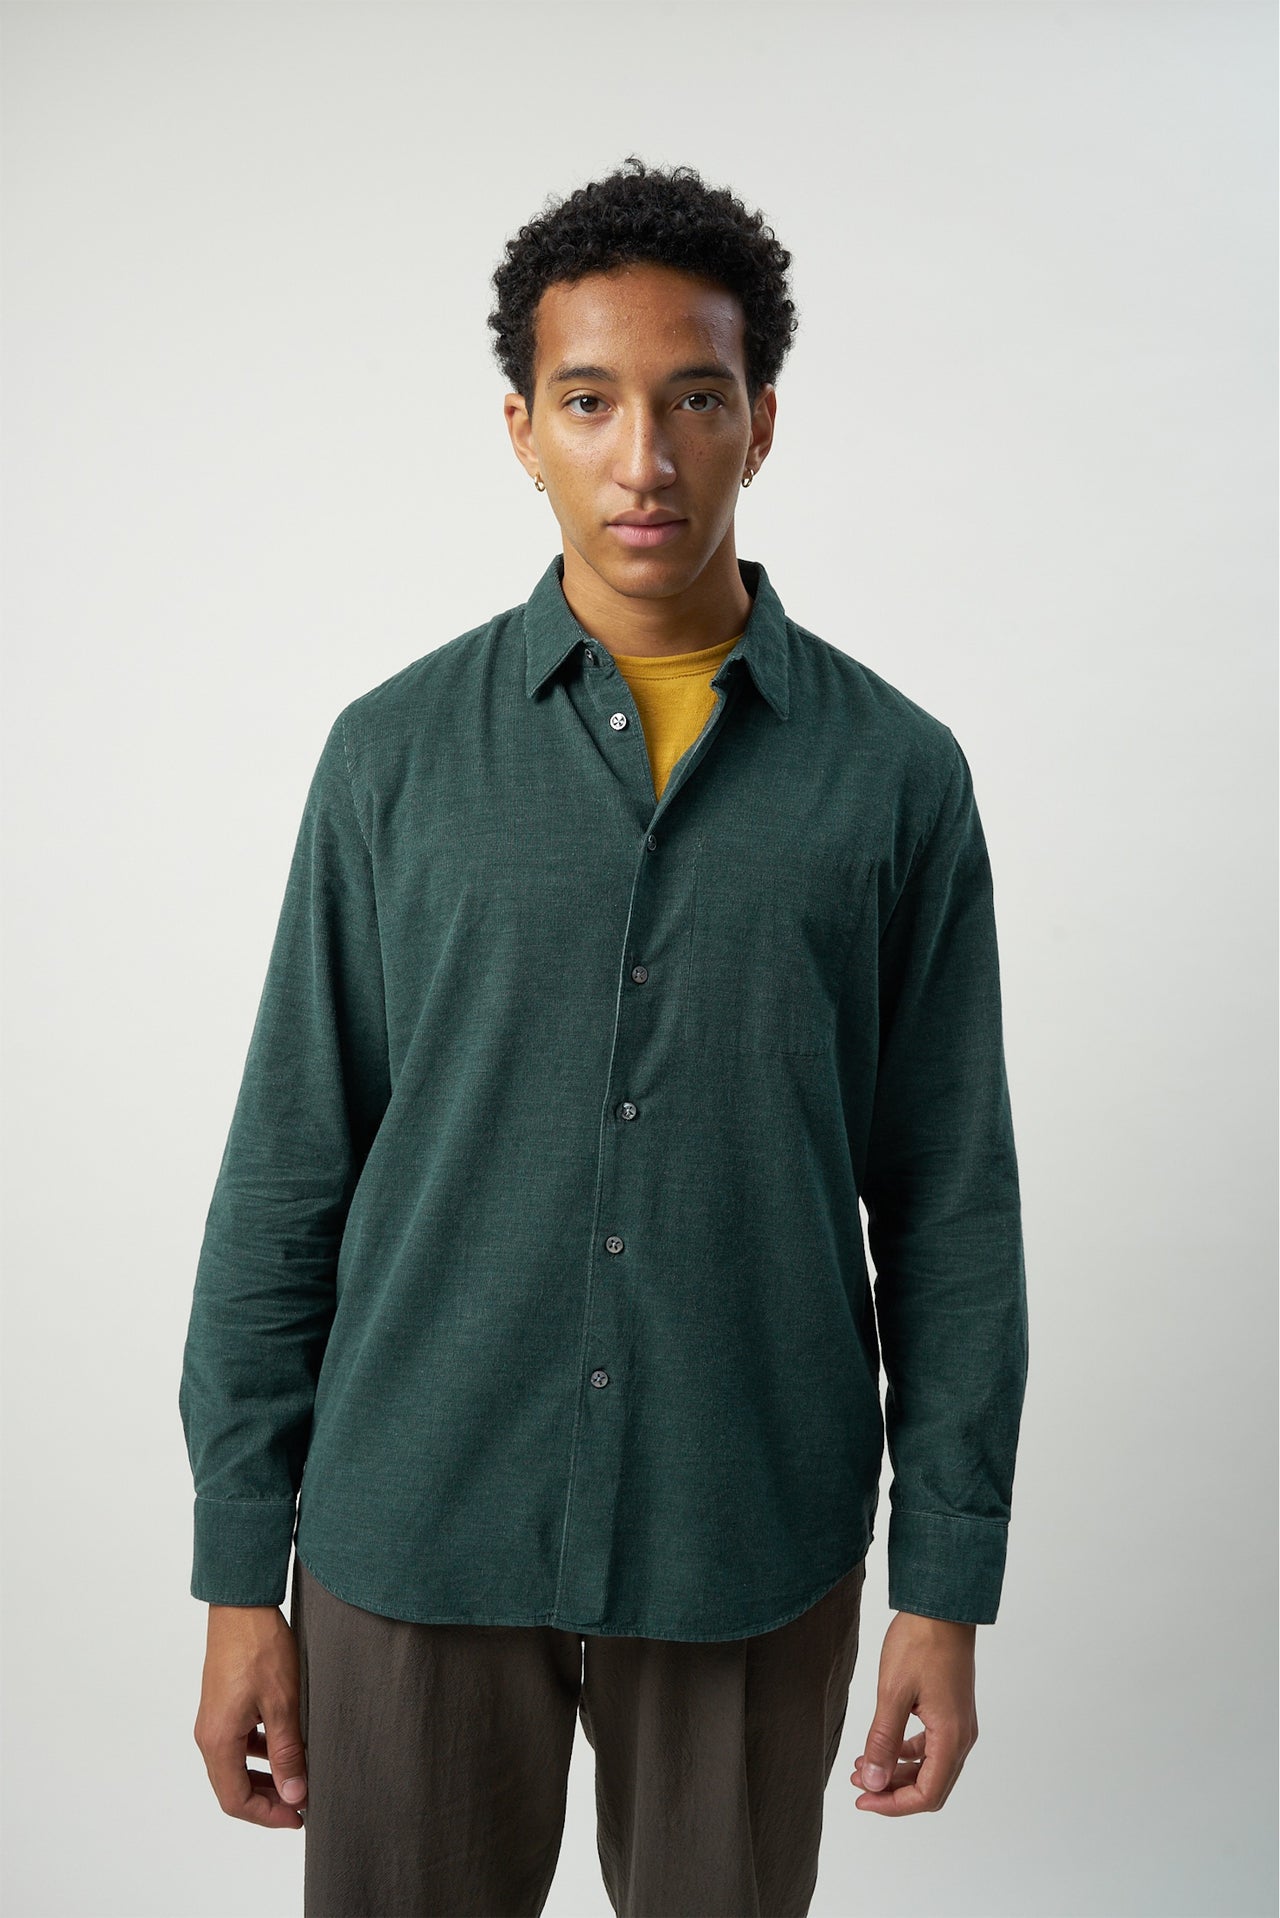 Feel Good Shirt in a Moss Green Japanese Corduroy Cotton